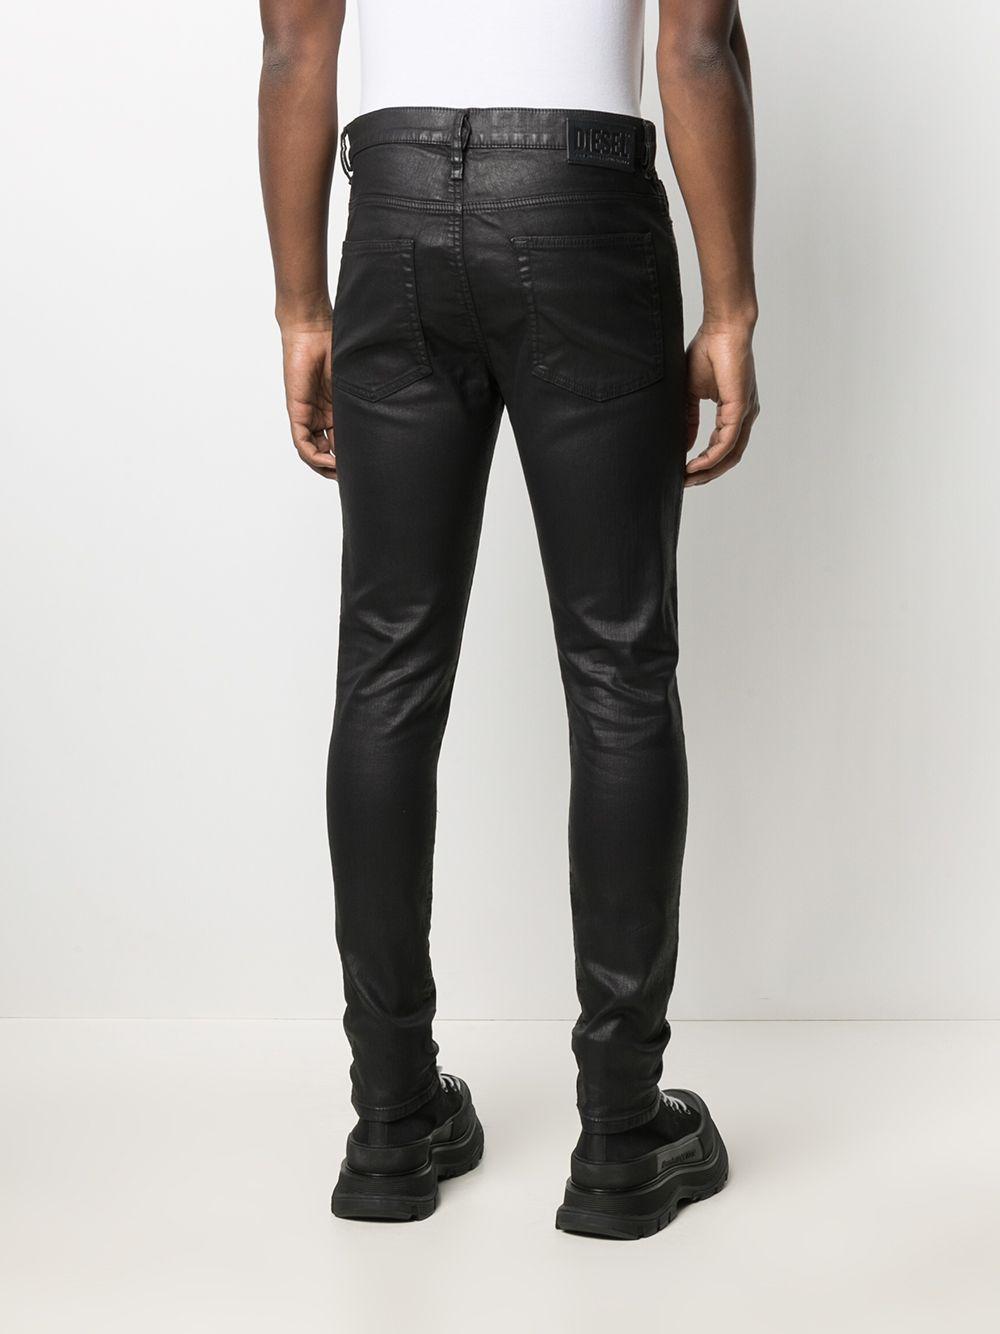 Socialisme zwaartekracht Cerebrum DIESEL High-shine Skinny-fit Jeans in Black for Men | Lyst